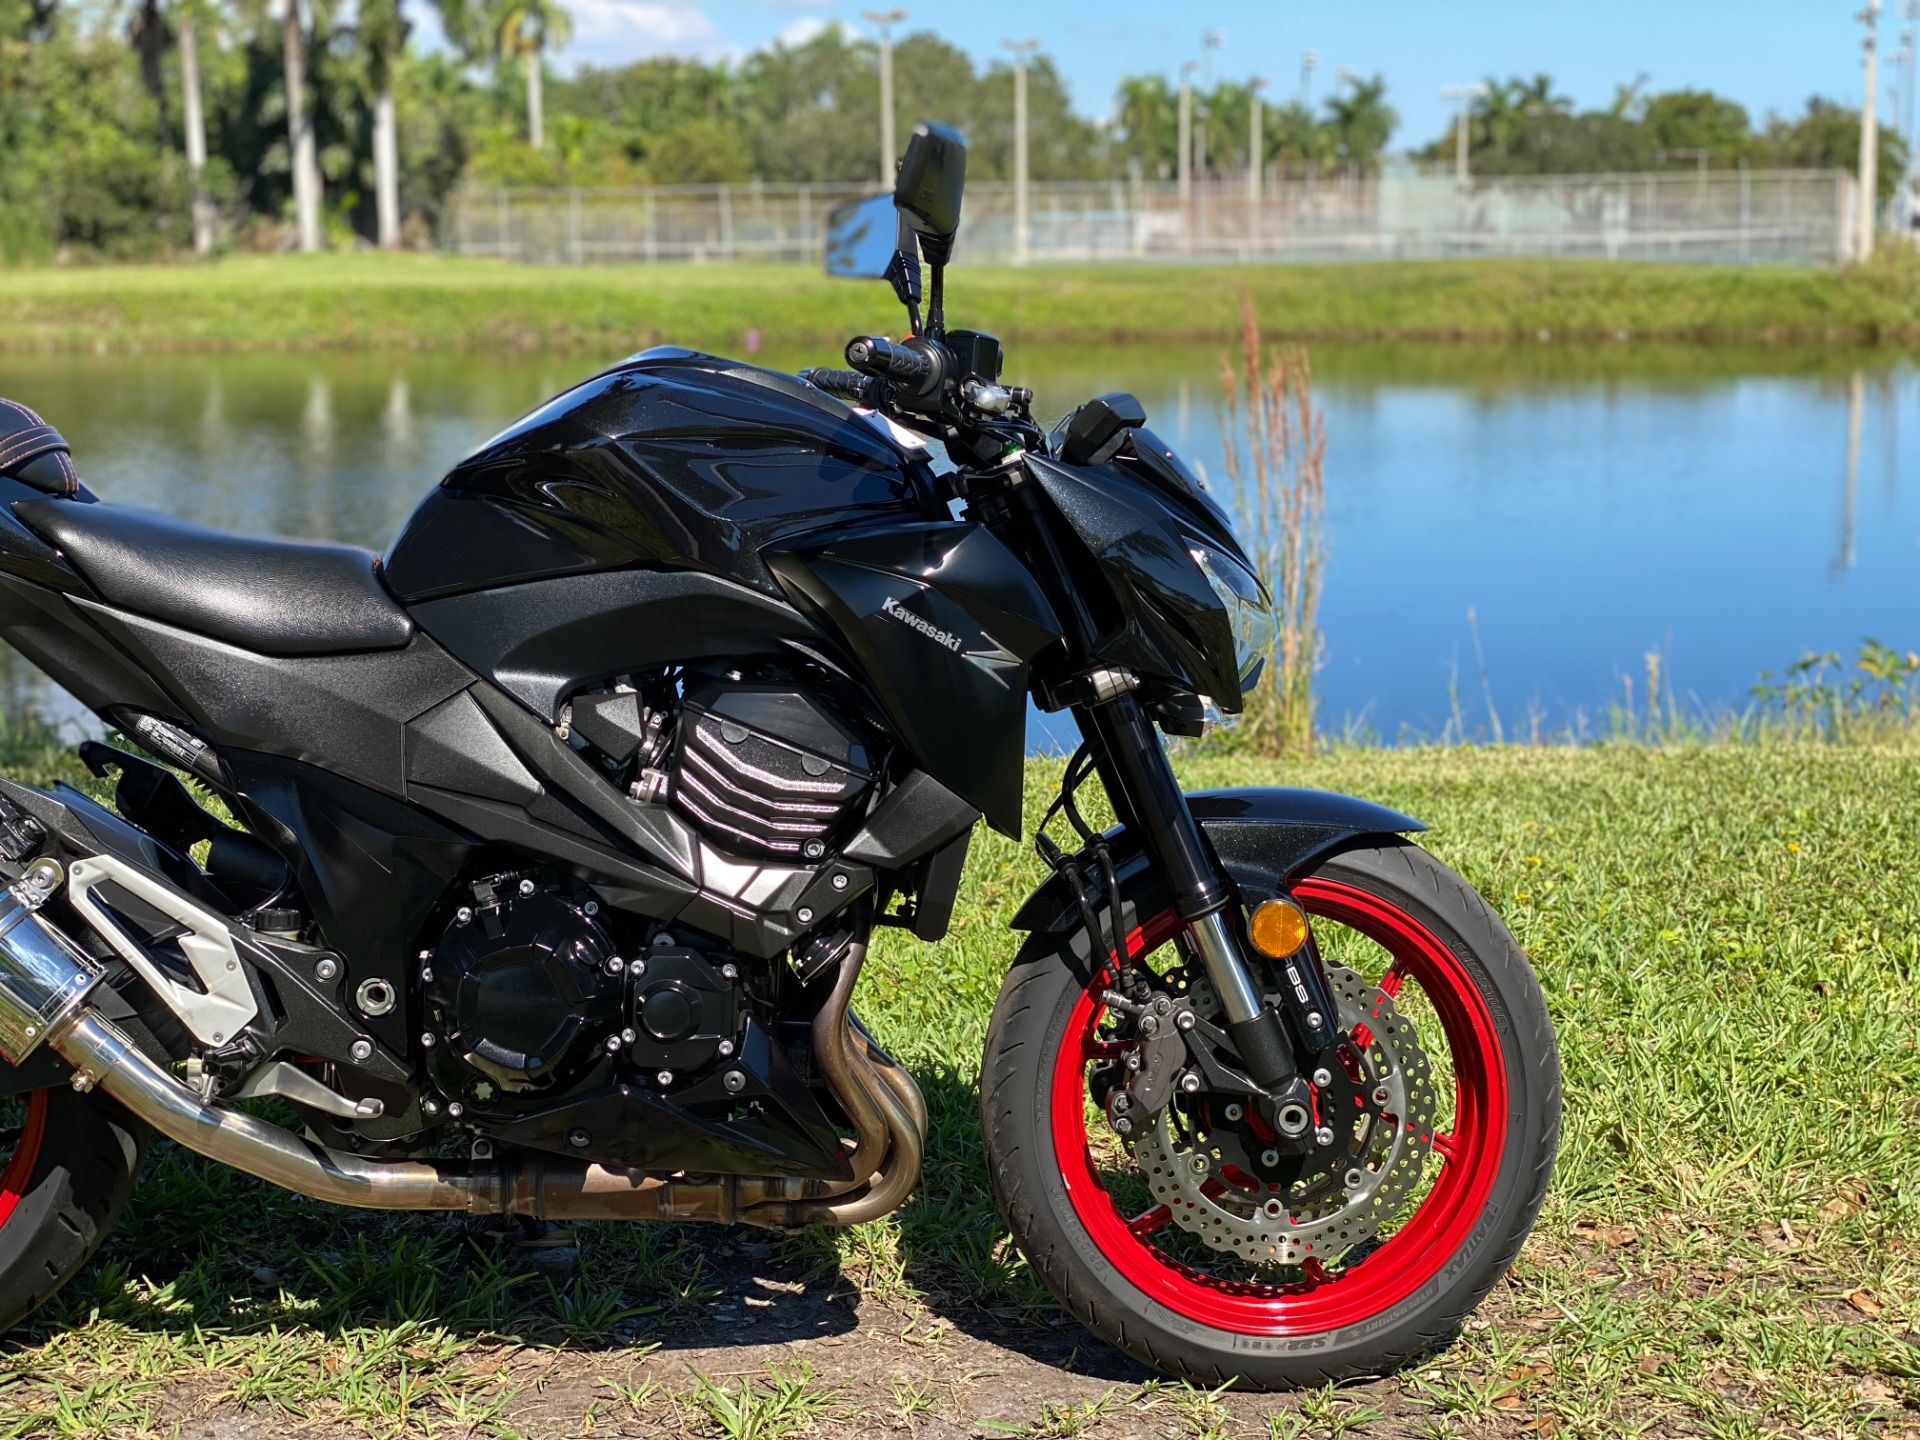 2016 Kawasaki Z800 ABS in North Miami Beach, Florida - Photo 6